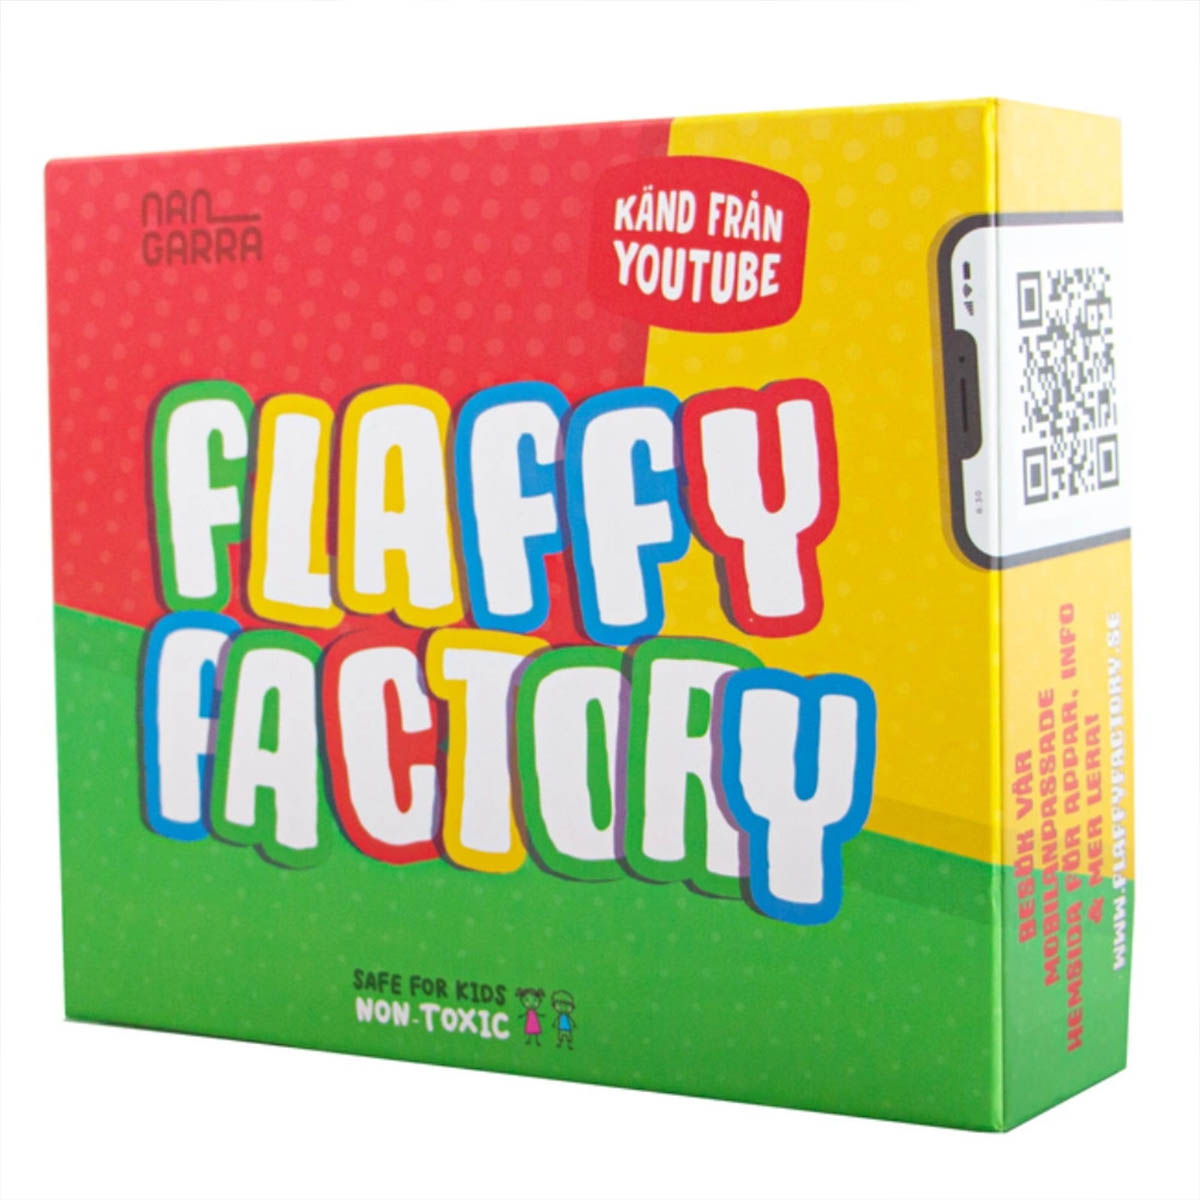 Spel, Flaffy factory